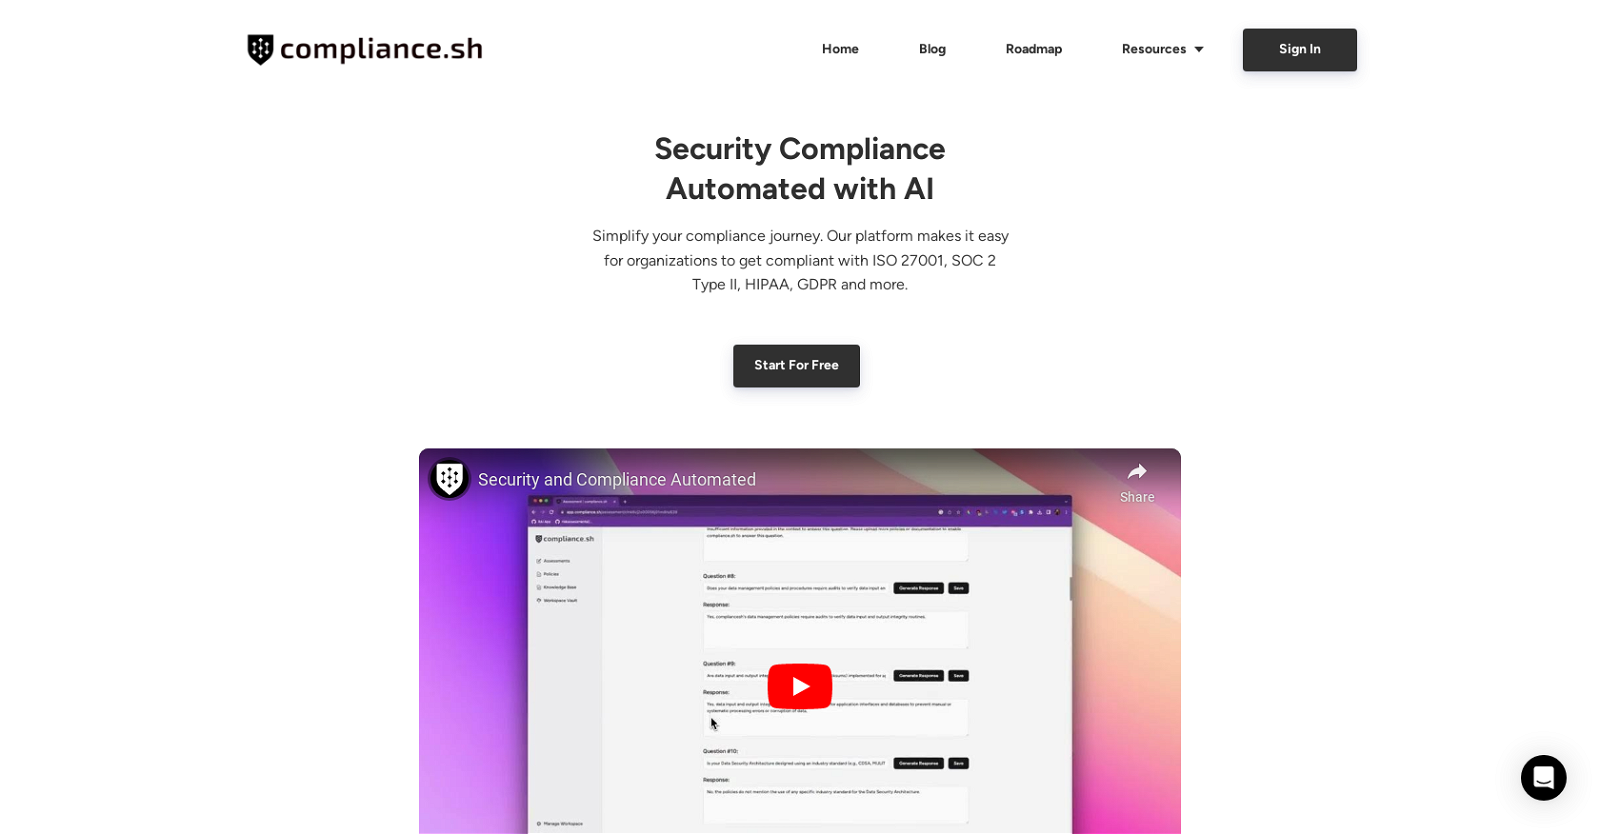 Compliance.sh website